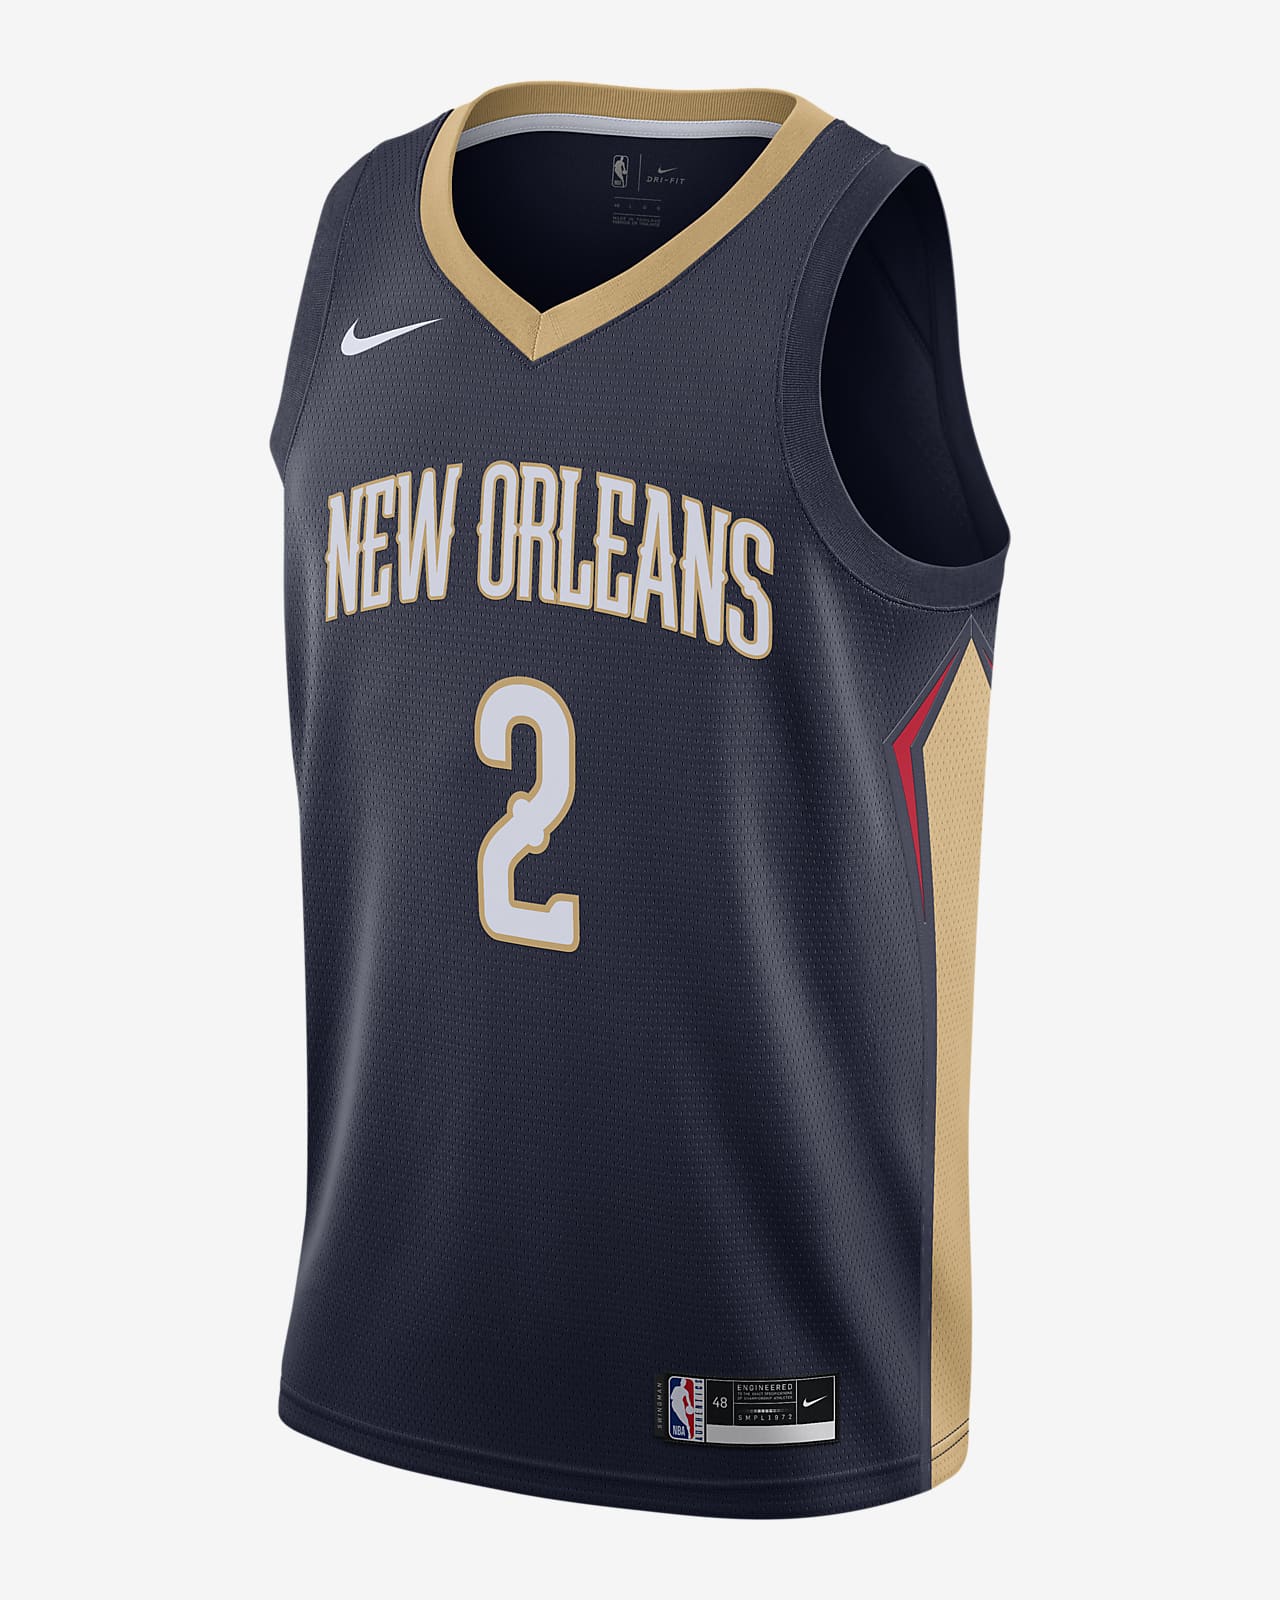 new orleans nola jersey